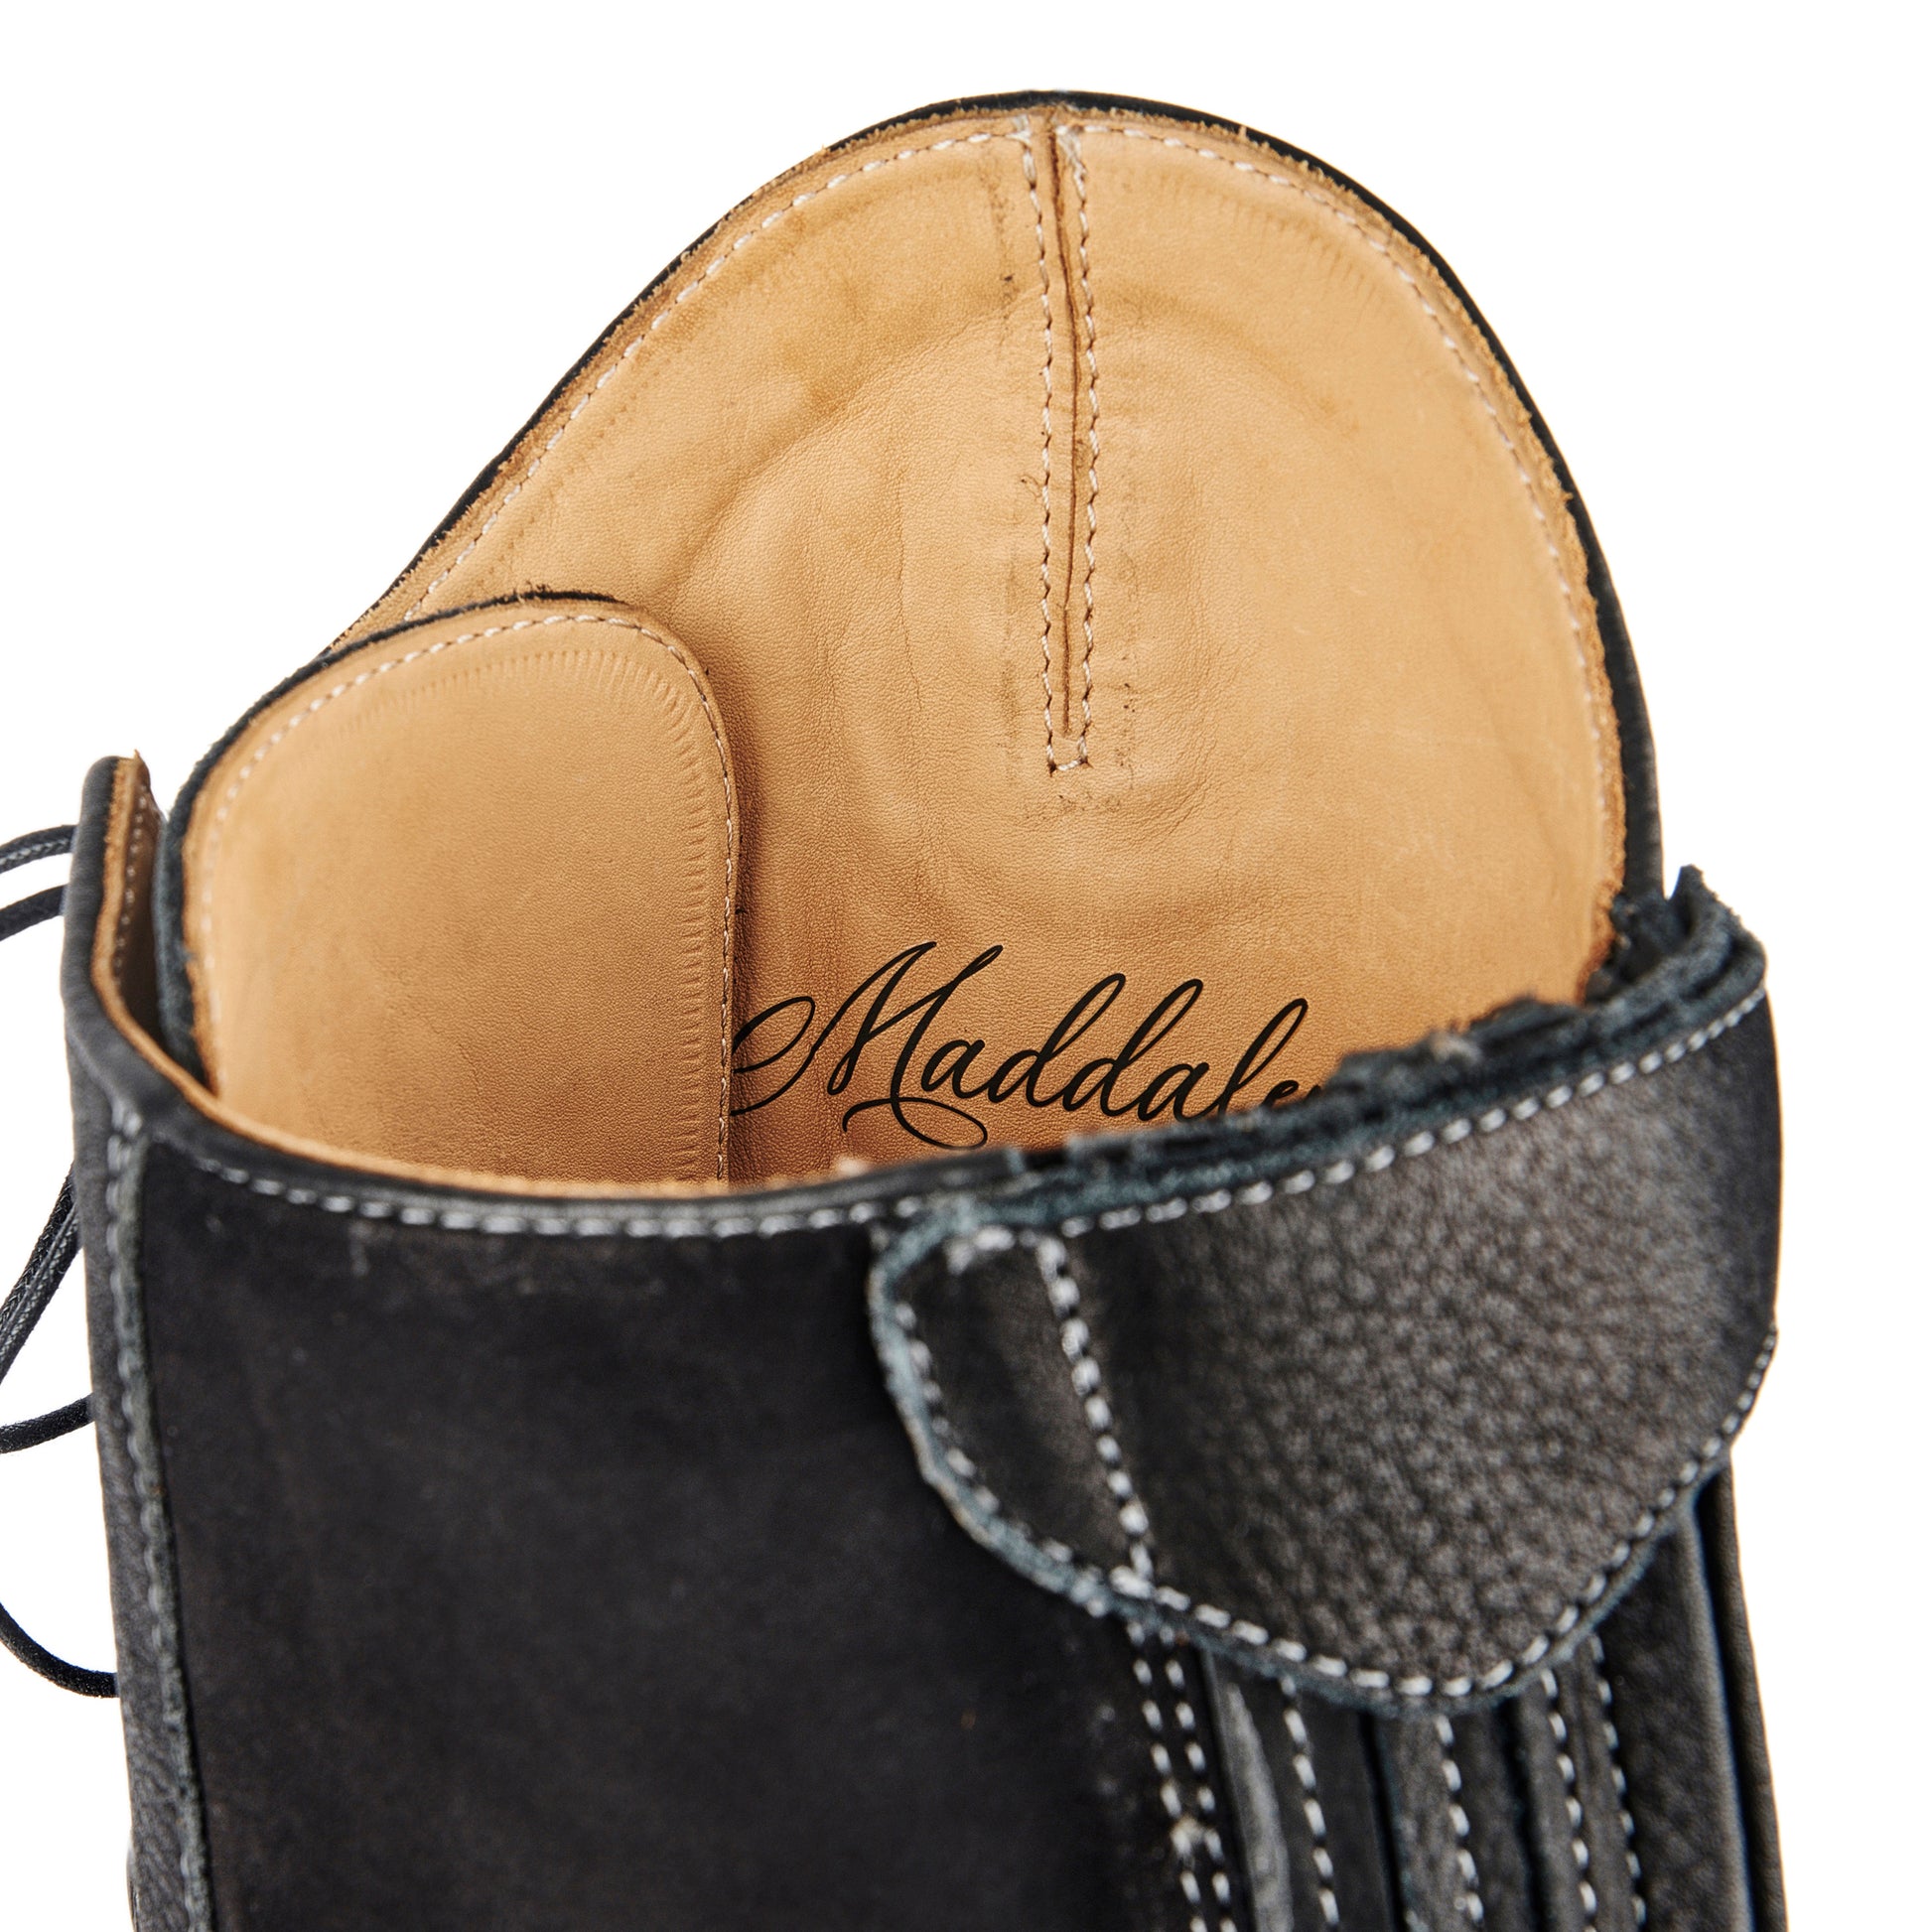 Moretta Maddalena Riding Boots - Black - 4/37